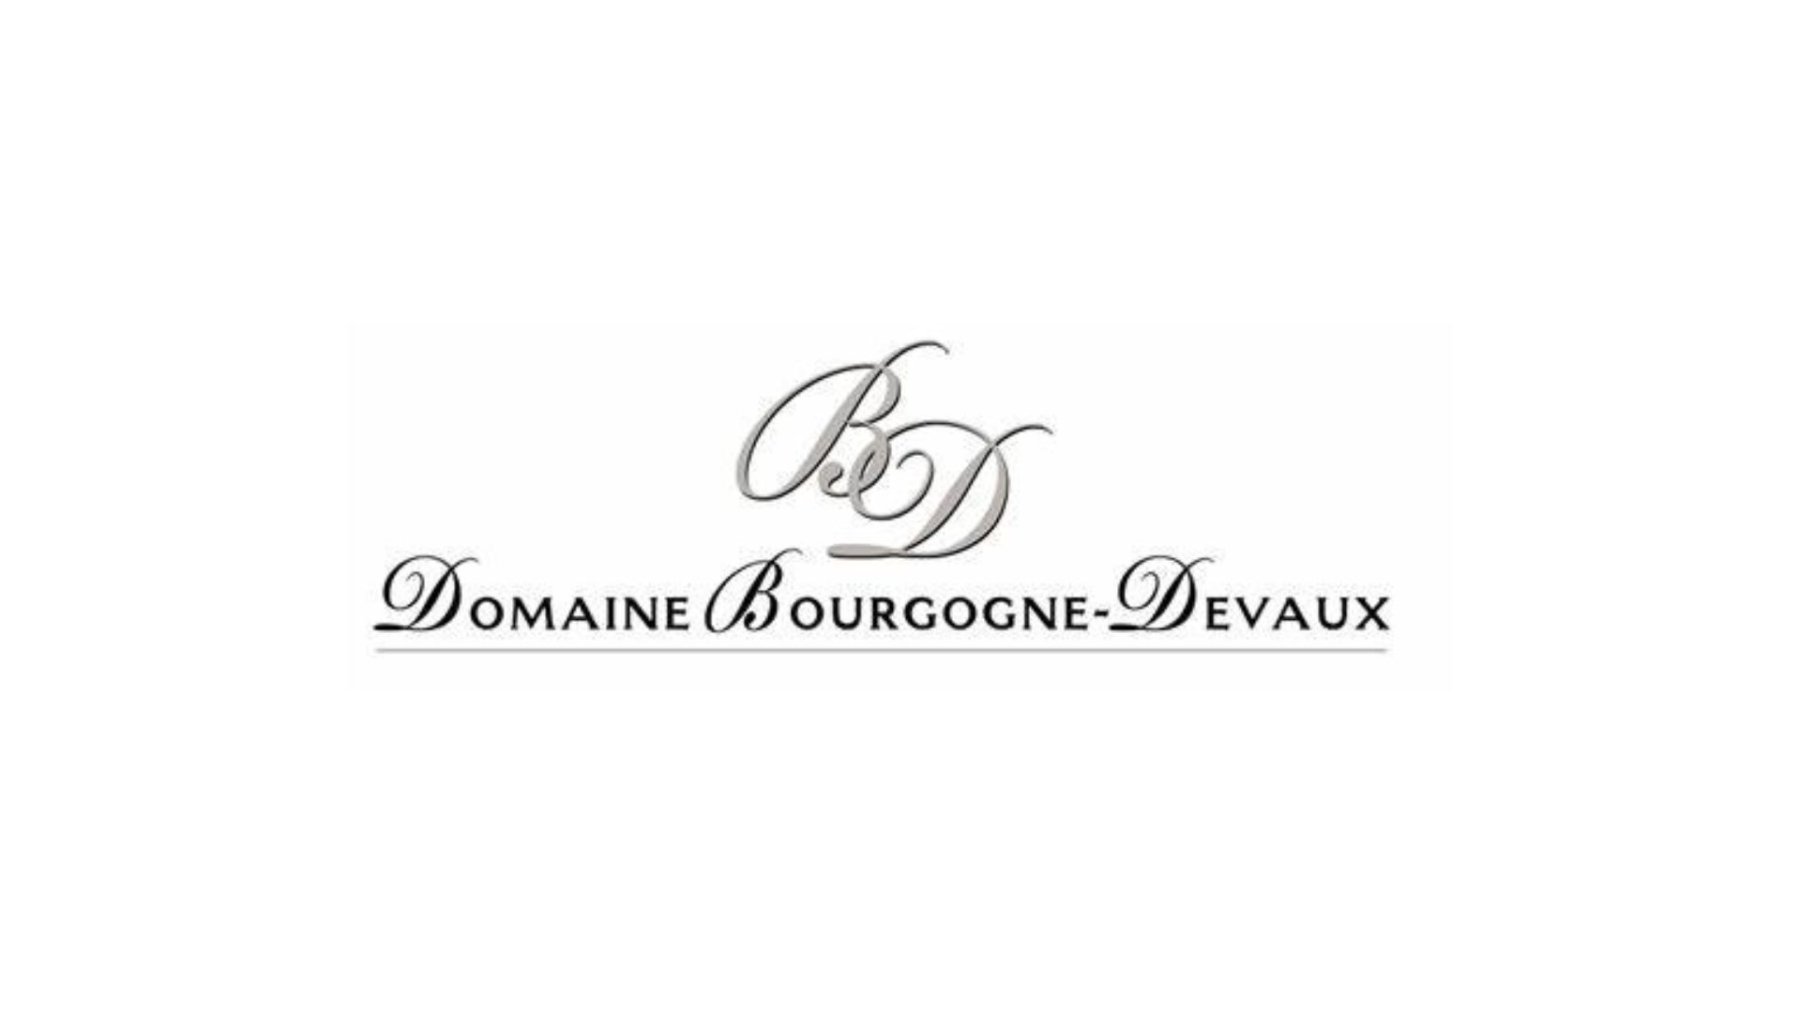 DOMAINE BOURGOGNE-DEVAUX